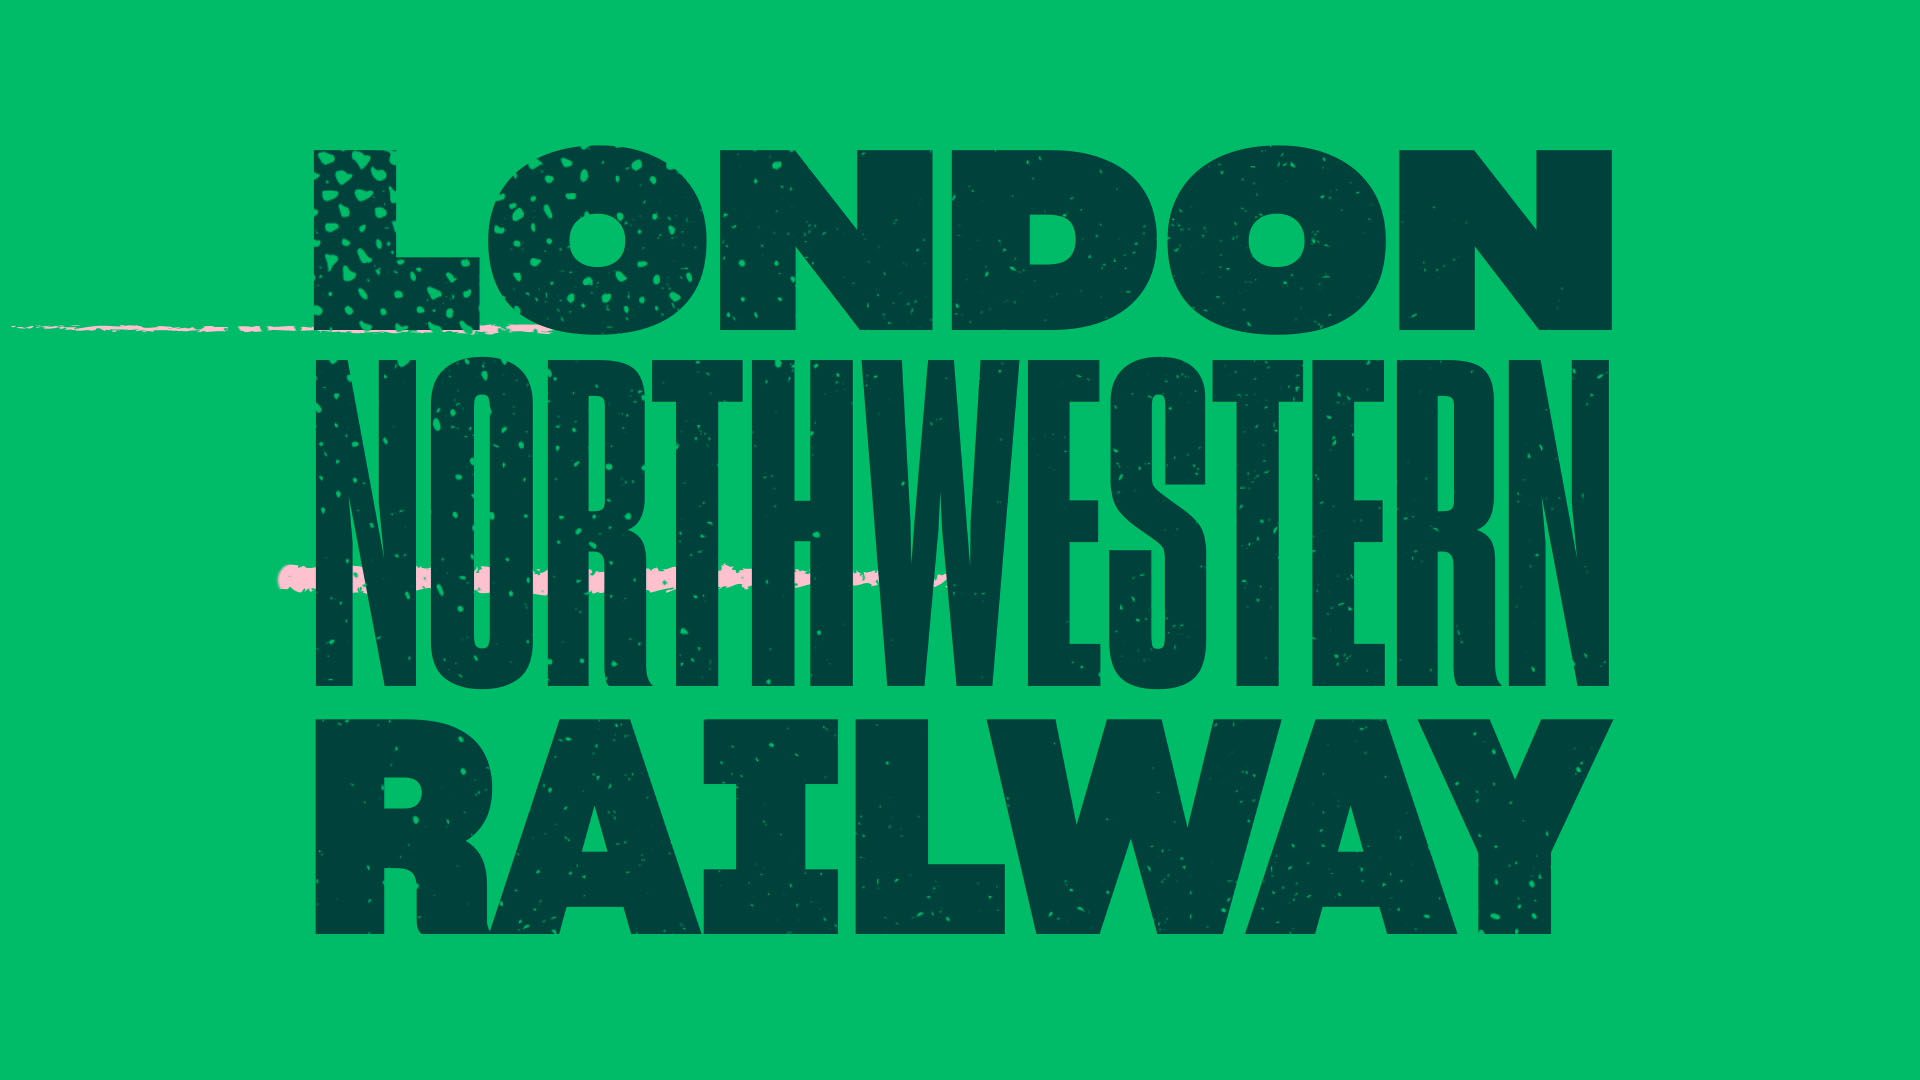 London Northwest Railway | Frantic